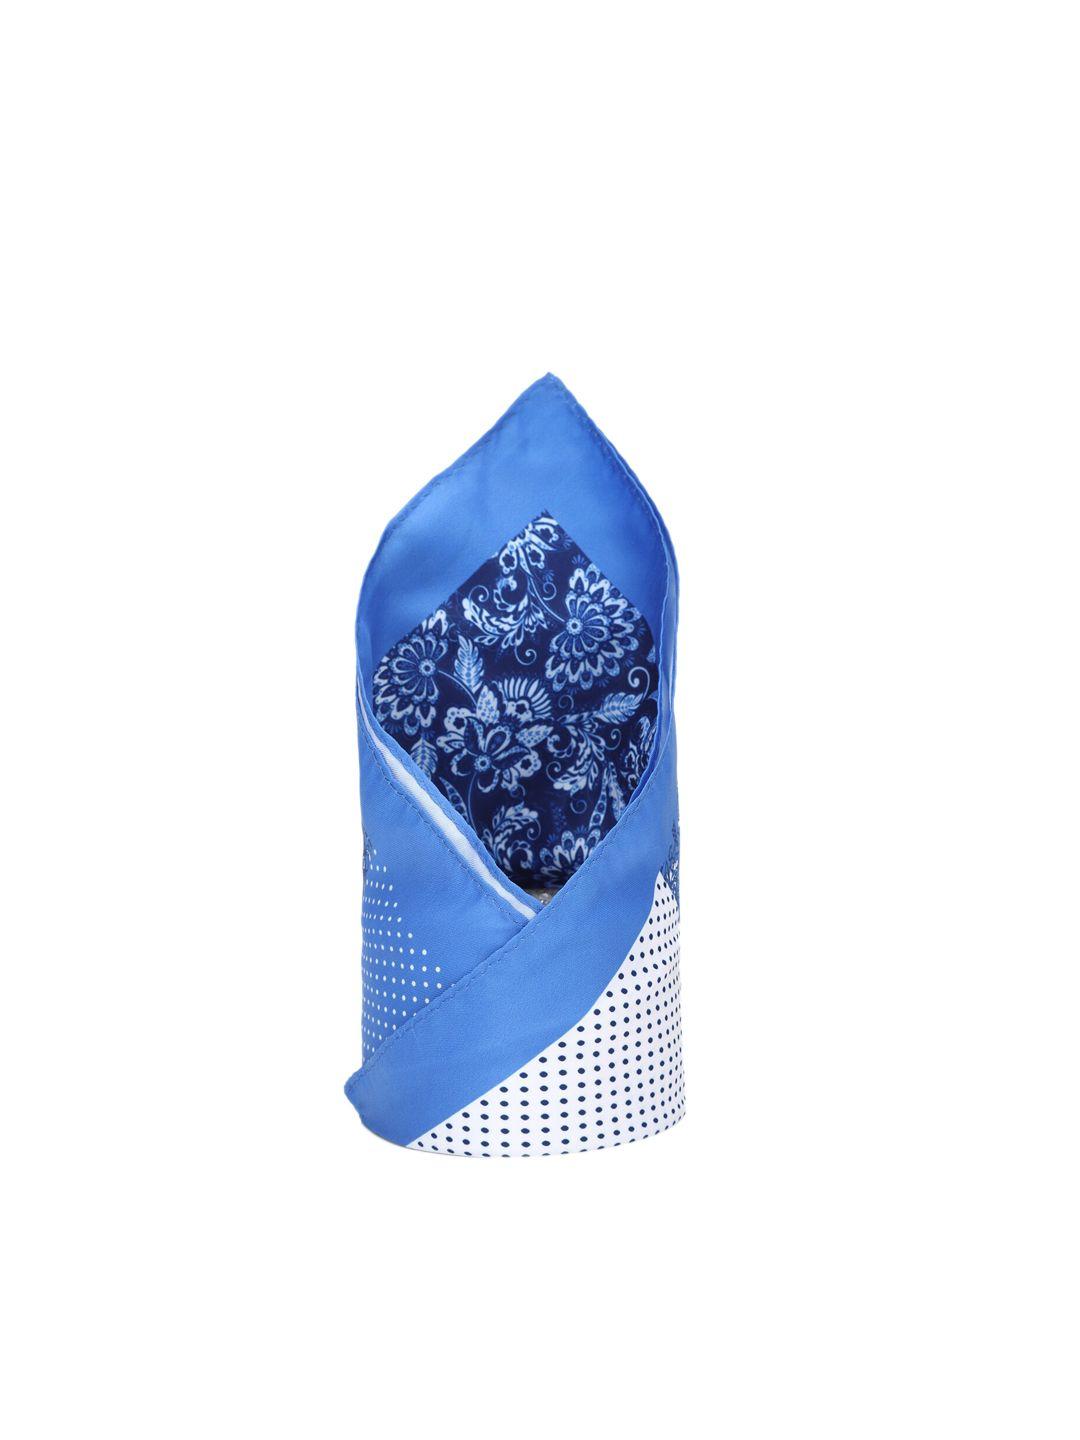 van heusen blue pocket square accessory gift set